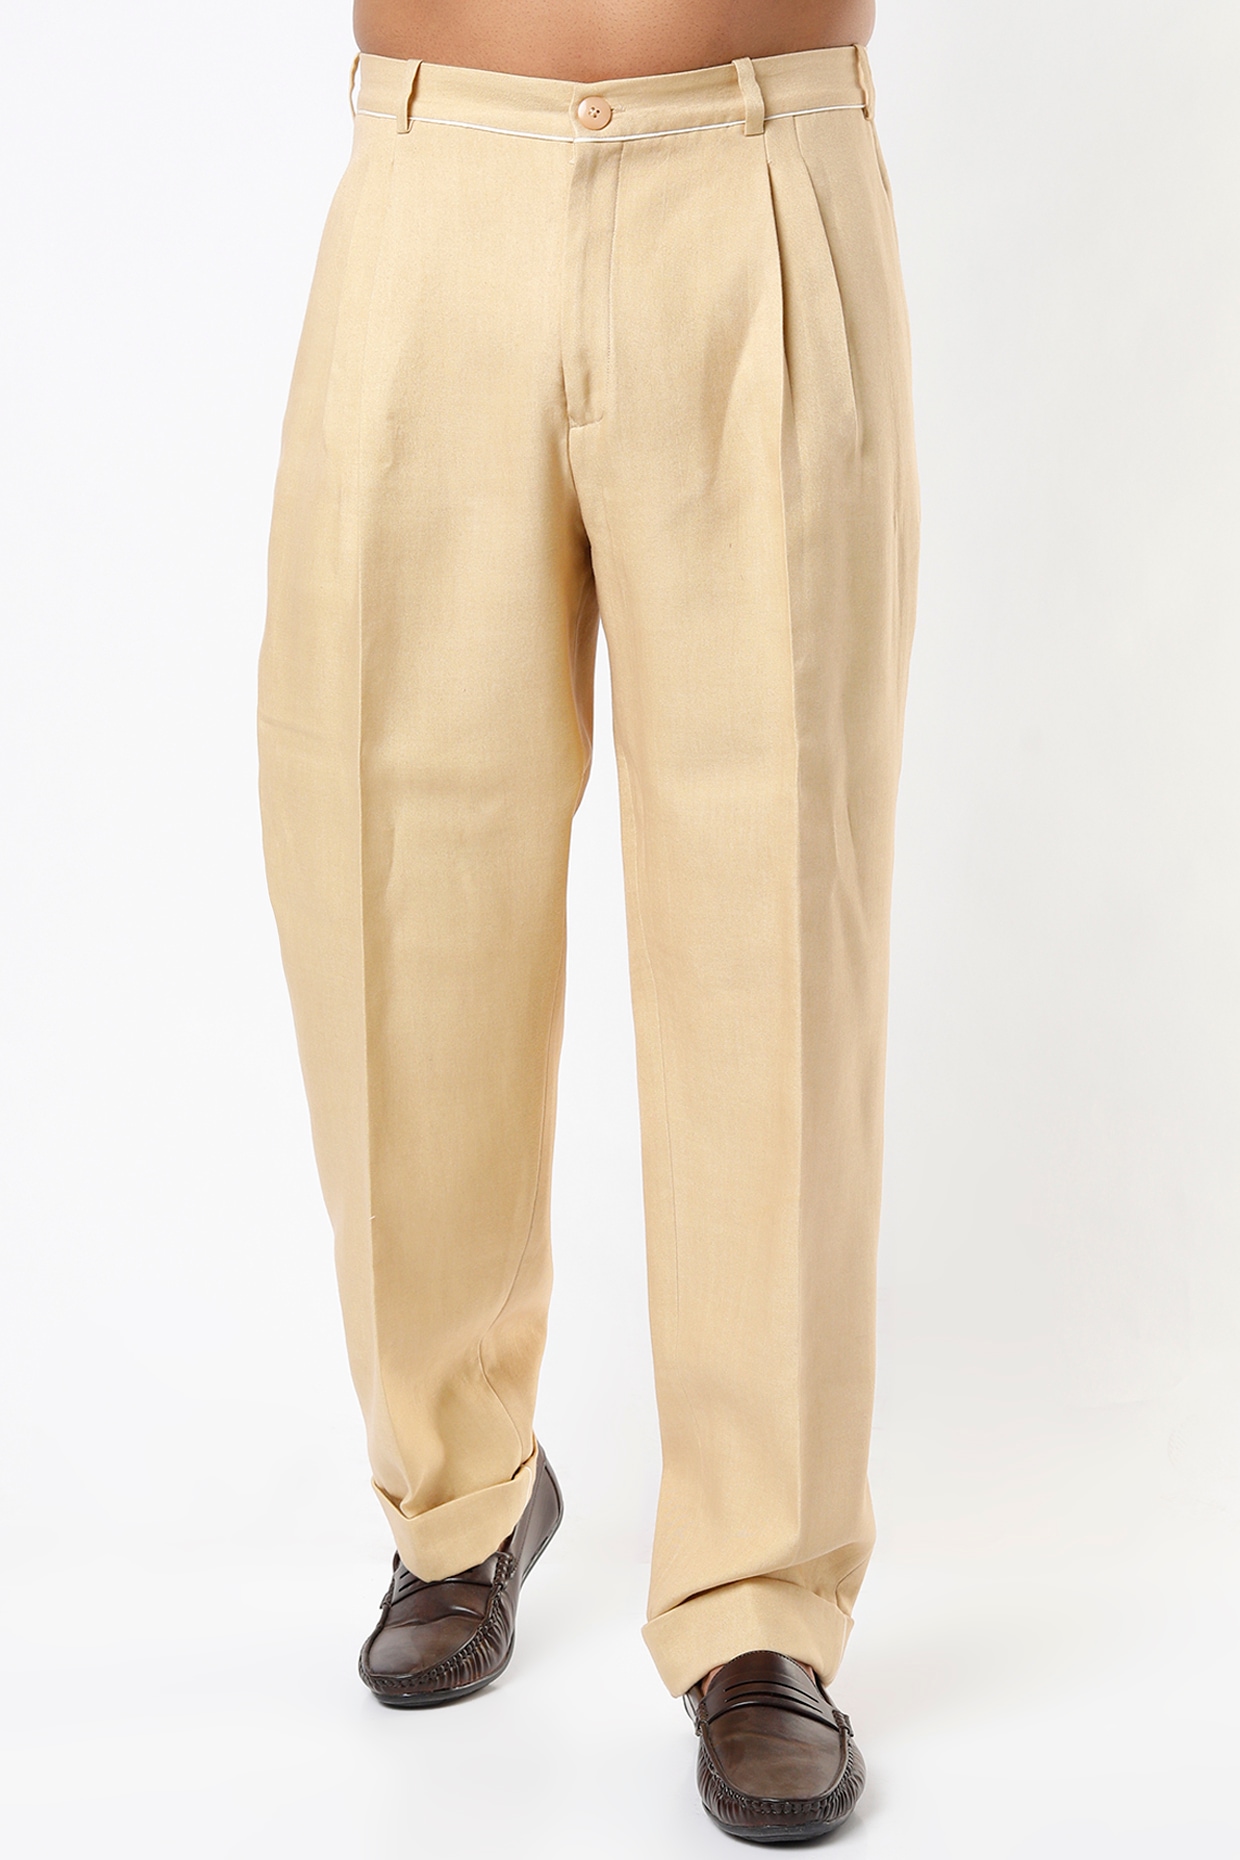 Bottega Veneta® Men's Belted Cotton Twill Pants in Black. Shop online now.